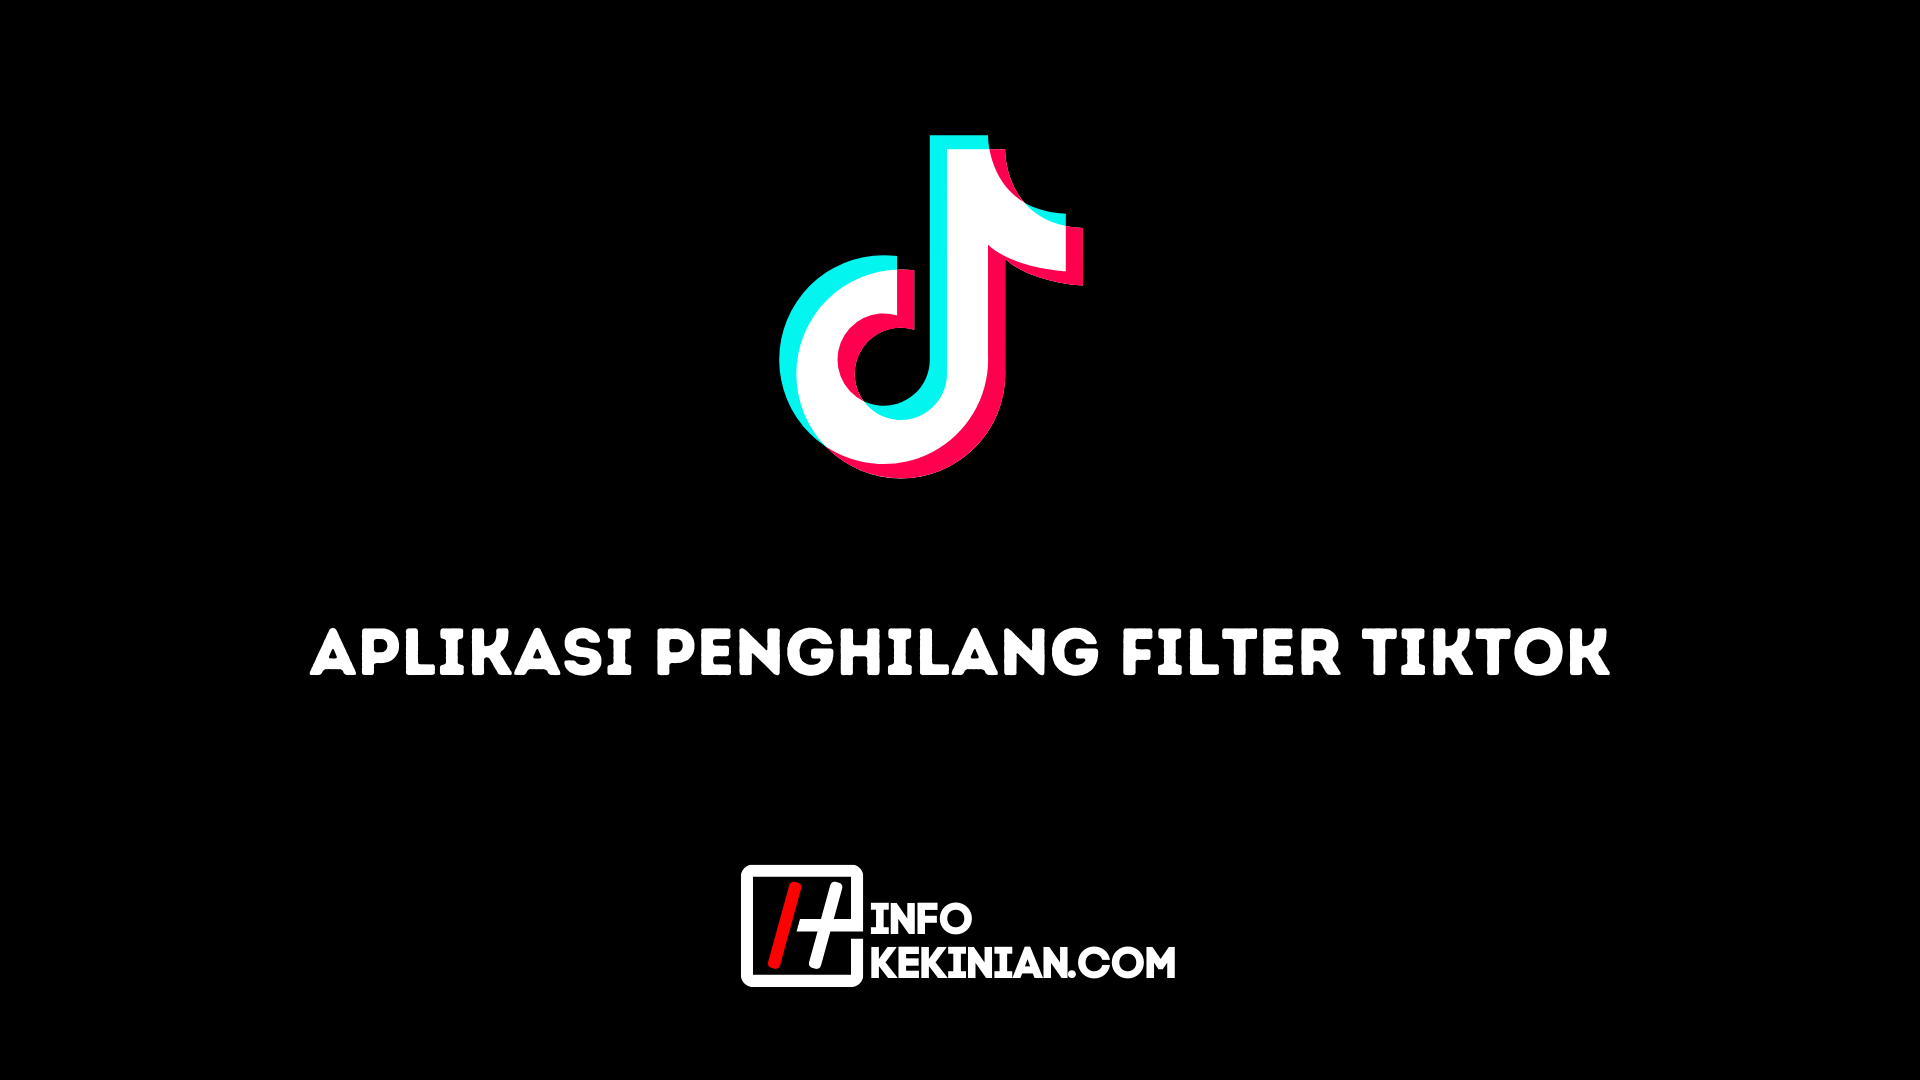 TikTok-Filterentfernungs-App